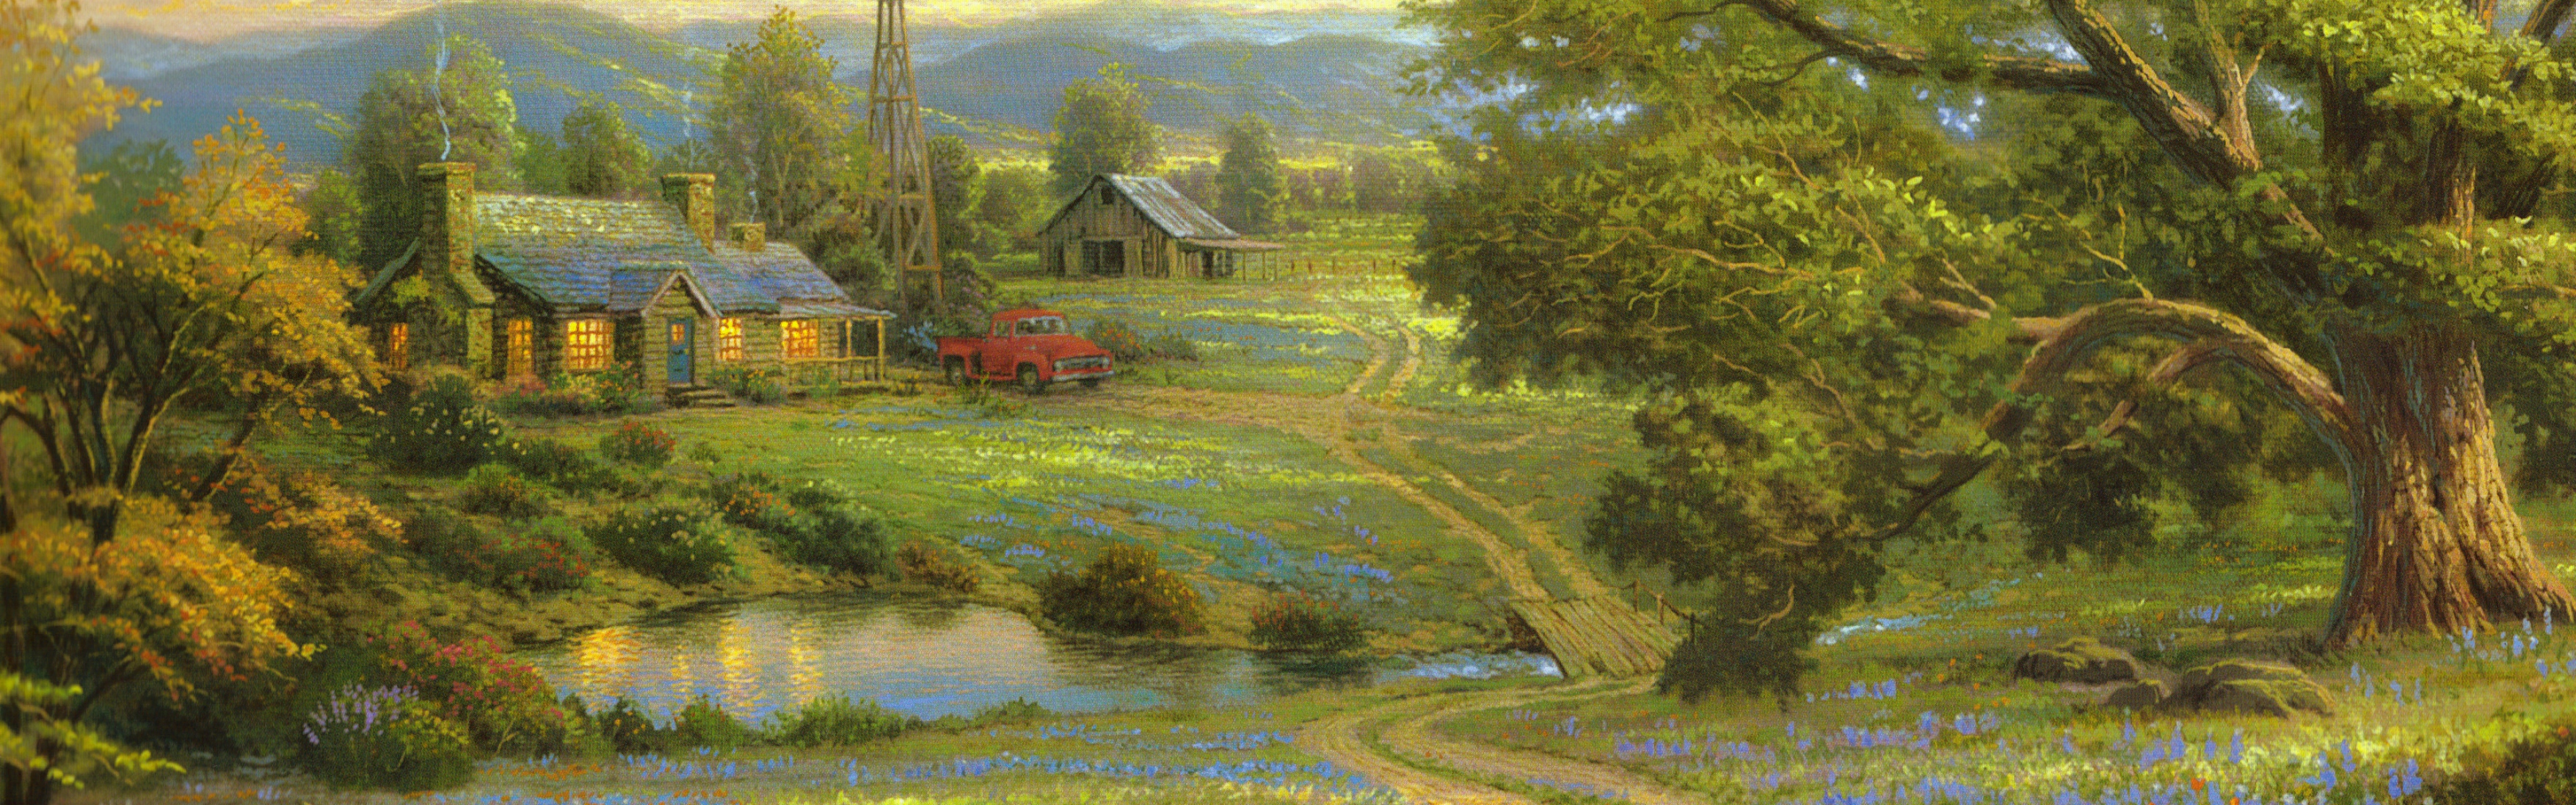 Download Wallpaper 3840x1200 Painting, Art, Landscape, Road